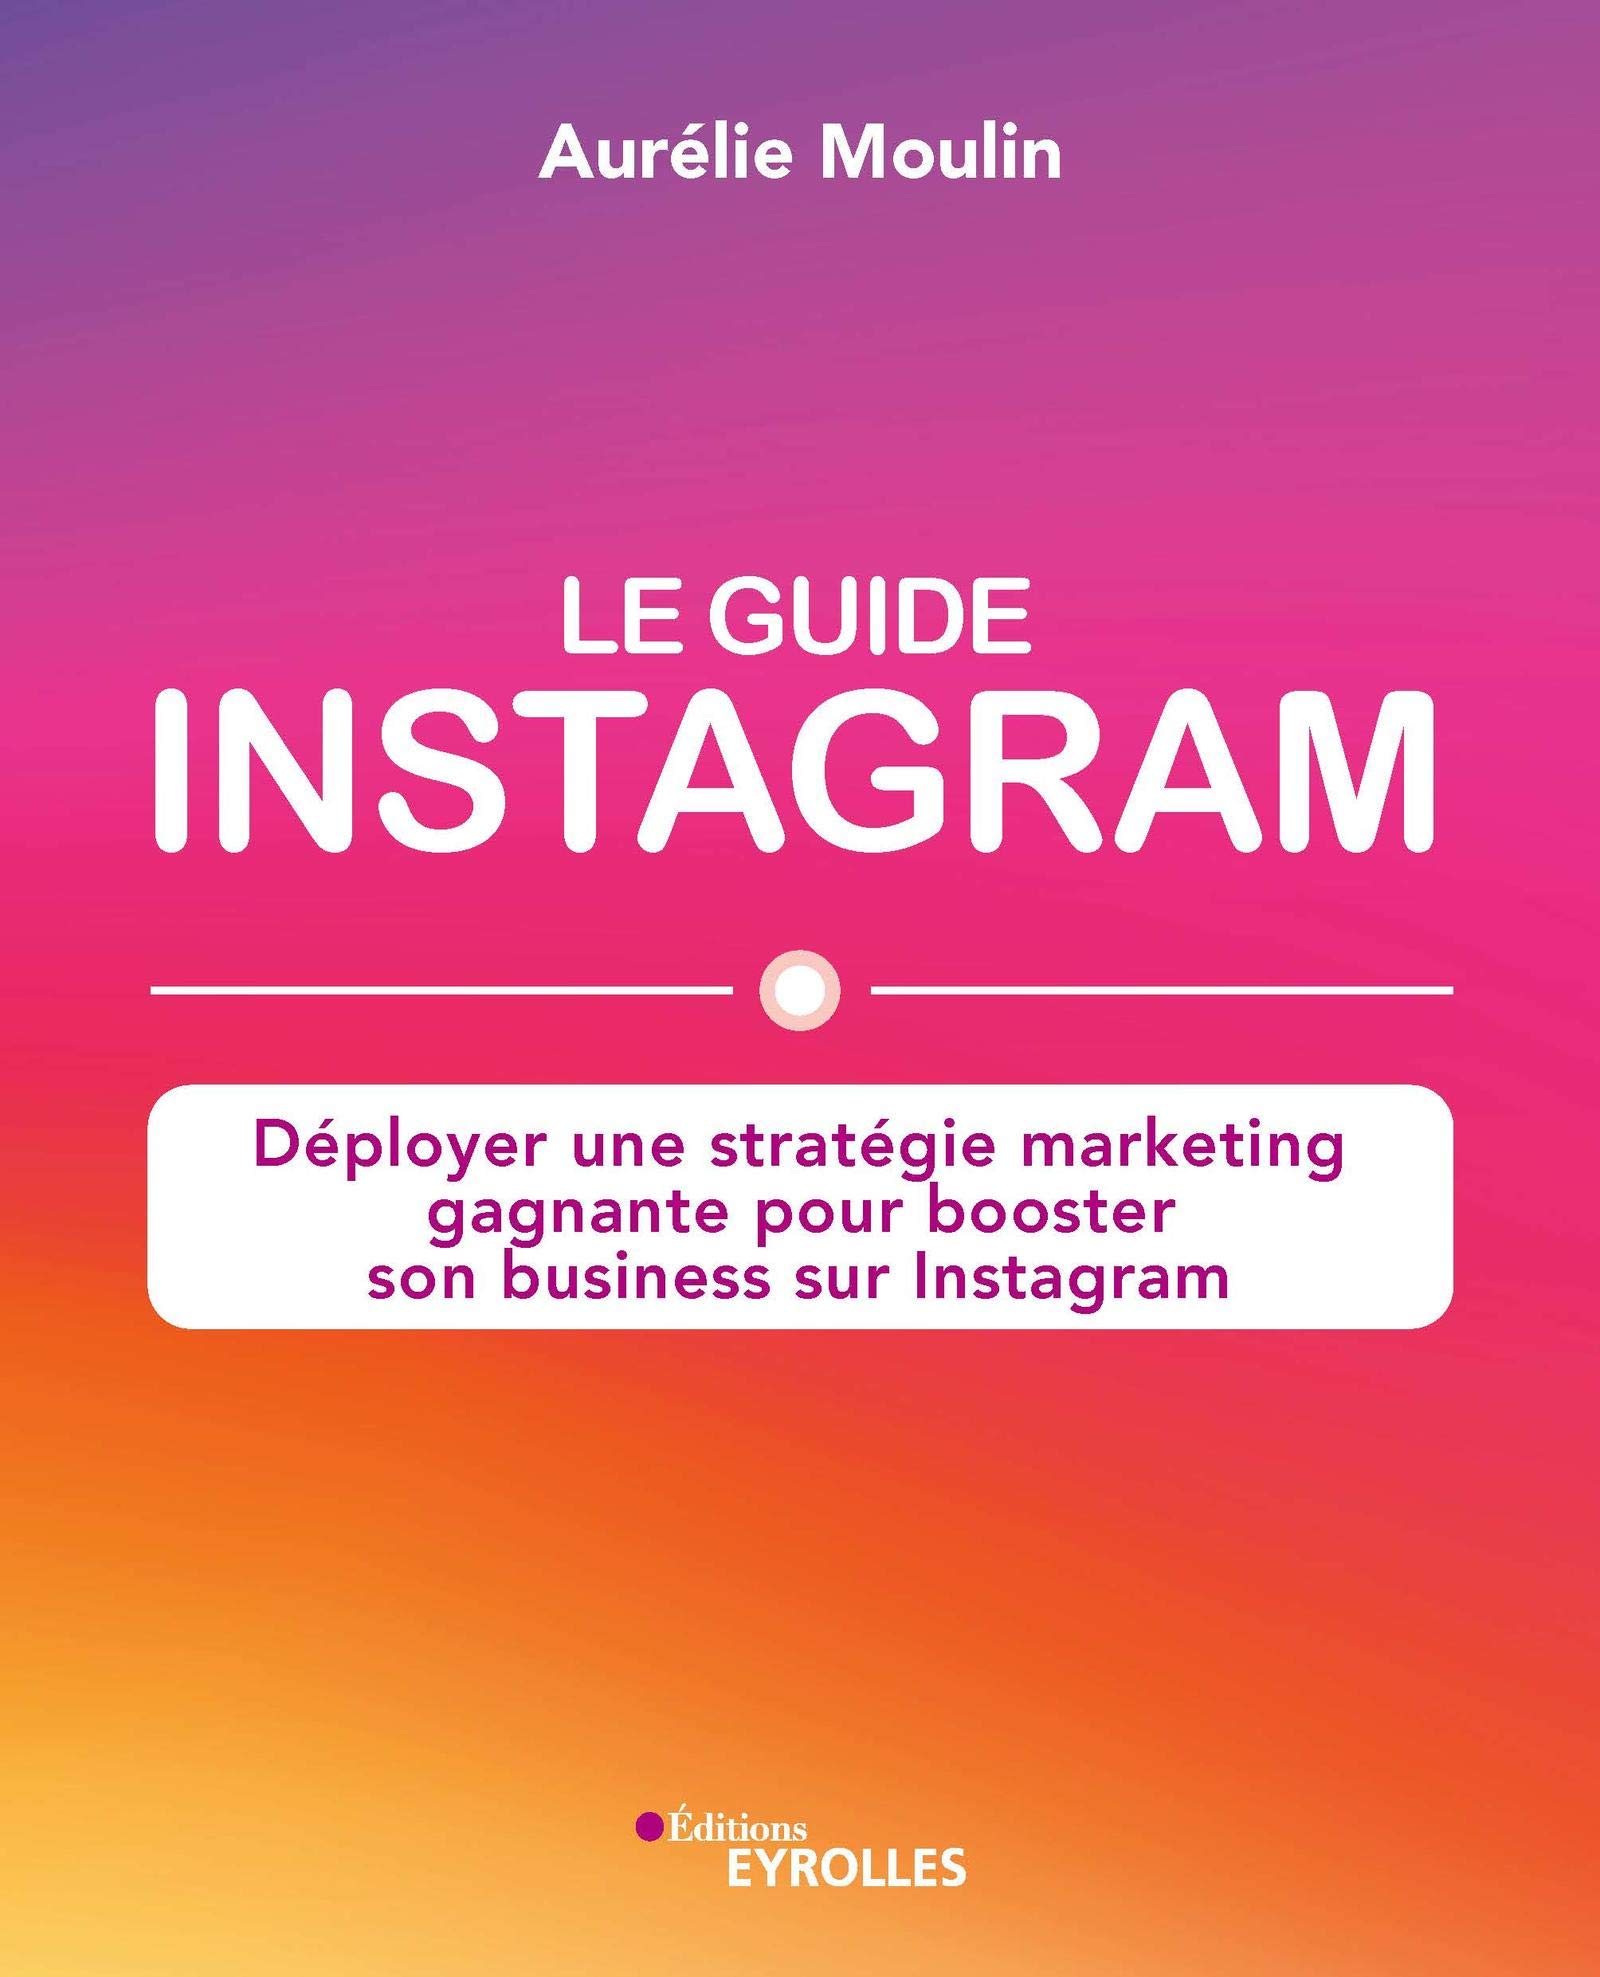 Le guide Instagram